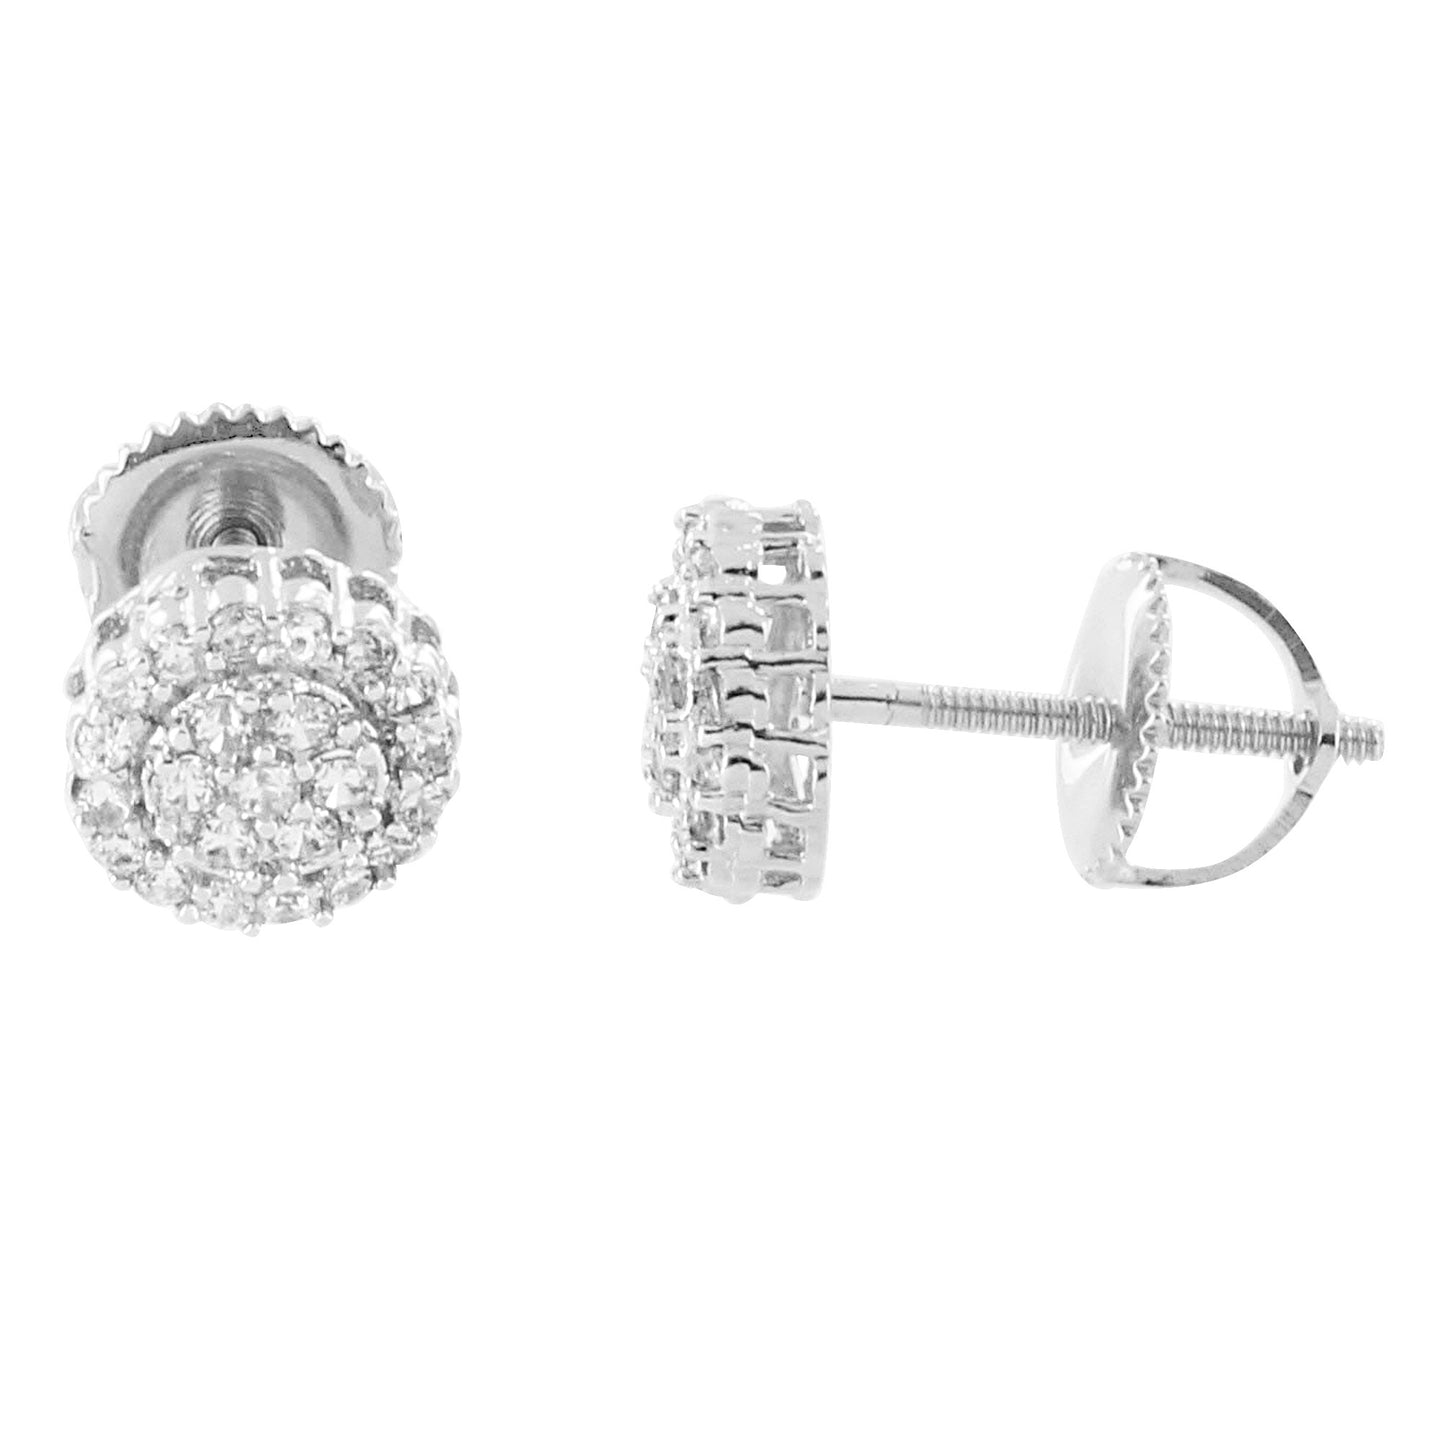 Round Cluster Earrings 14K White Gold Finish Lab Diamonds Halo Design Screw On Studs